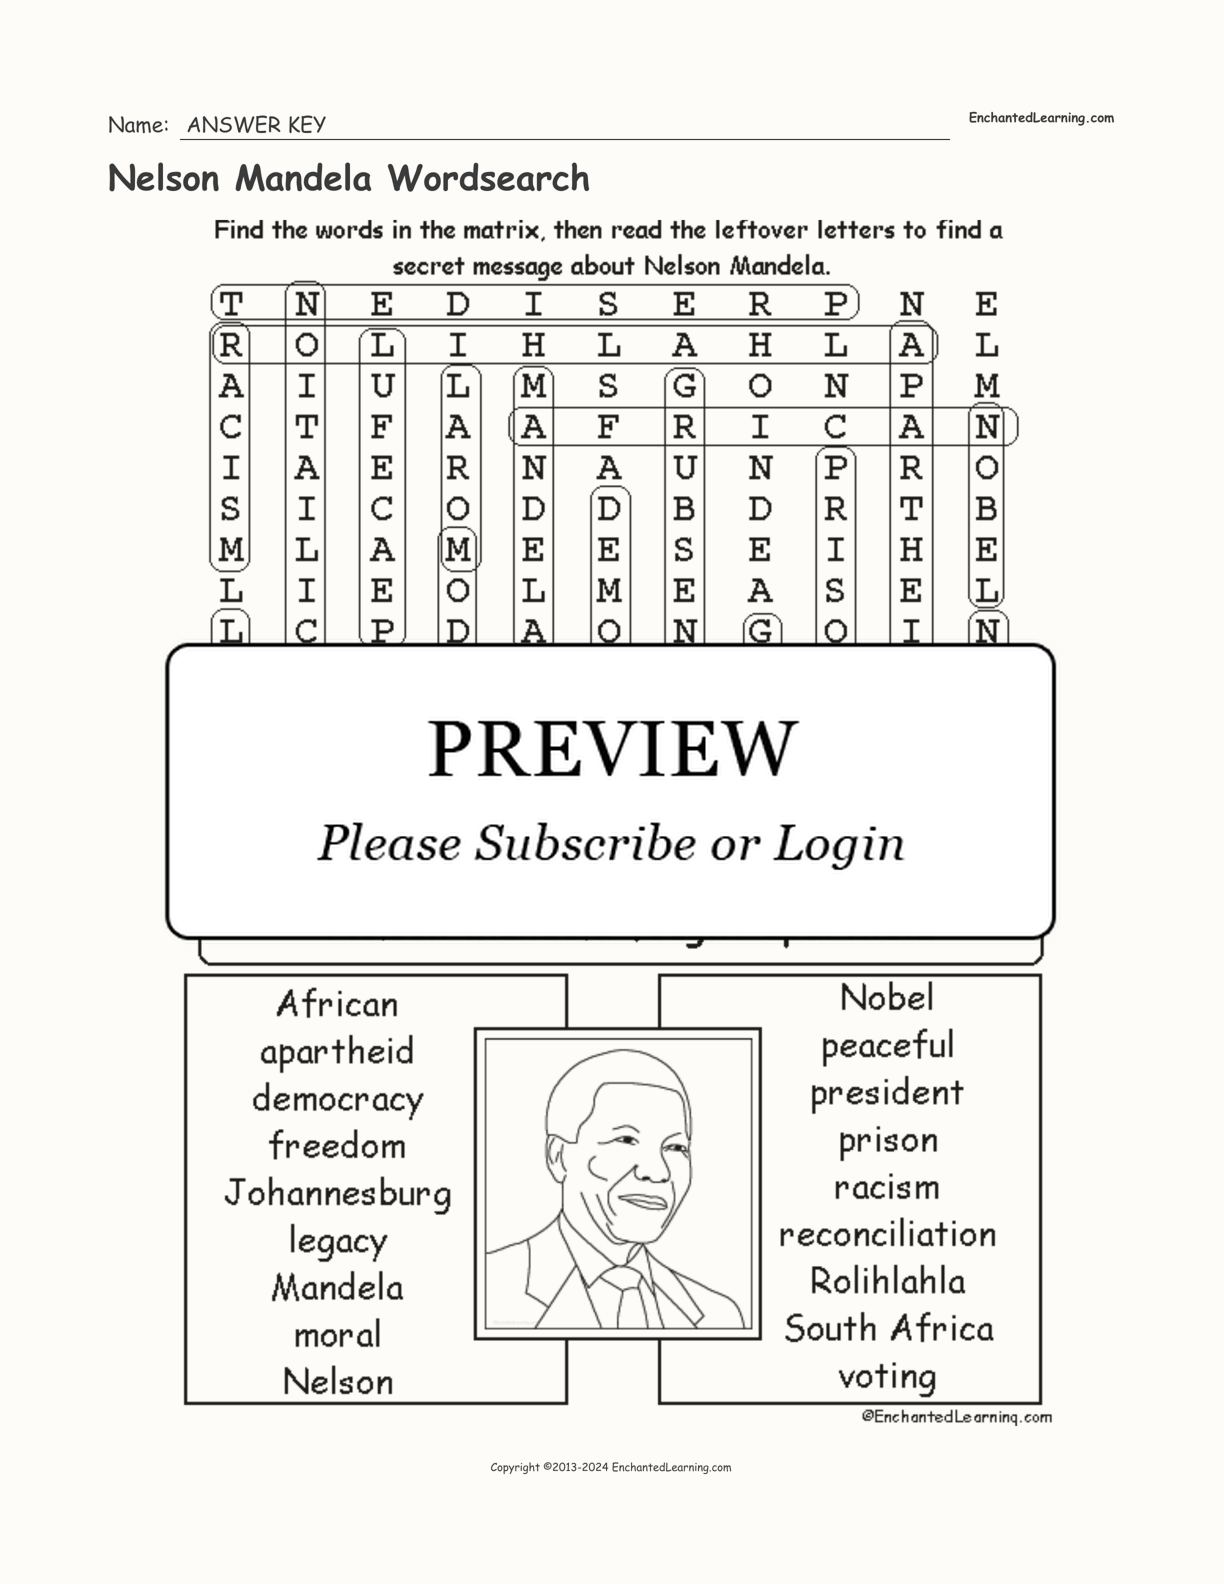 Nelson Mandela Wordsearch interactive worksheet page 2